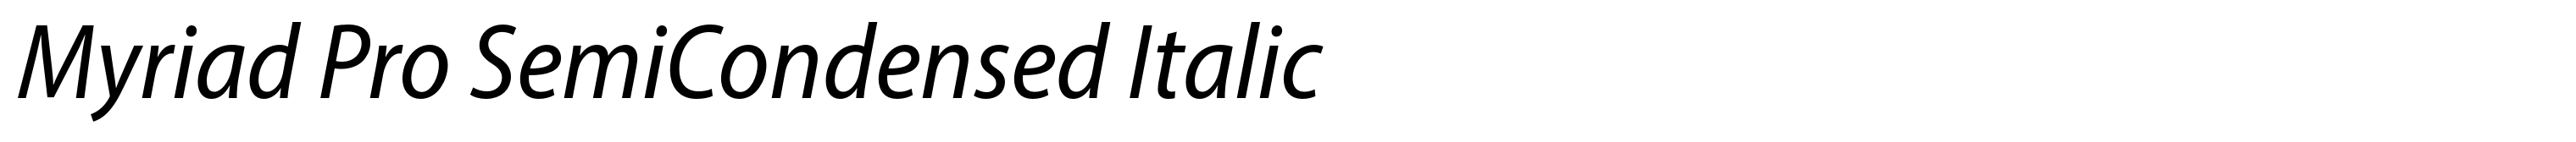 Myriad Pro SemiCondensed Italic